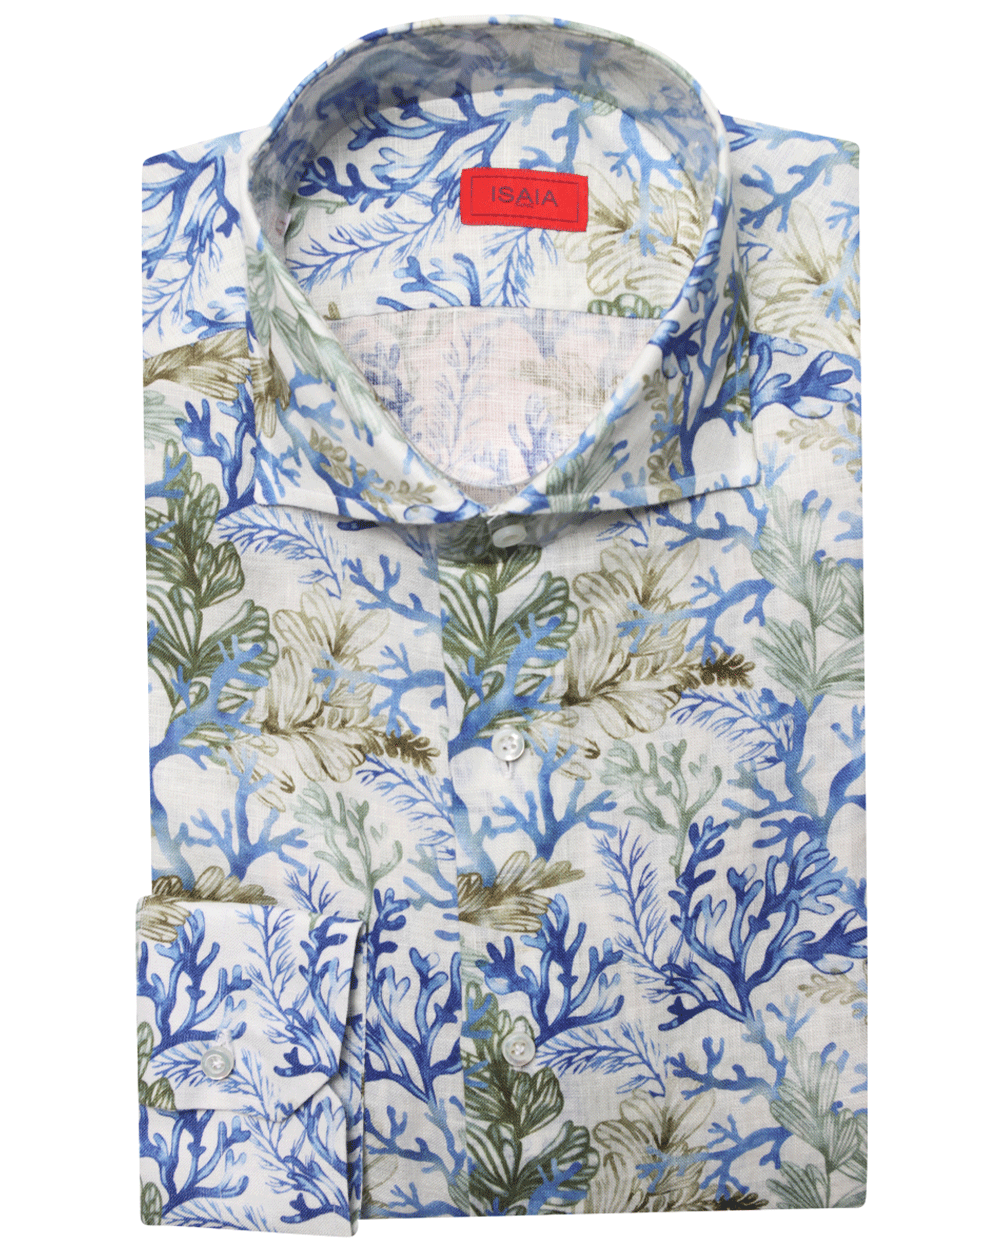 Green and Blue Coral Print Linen Dress Shirt